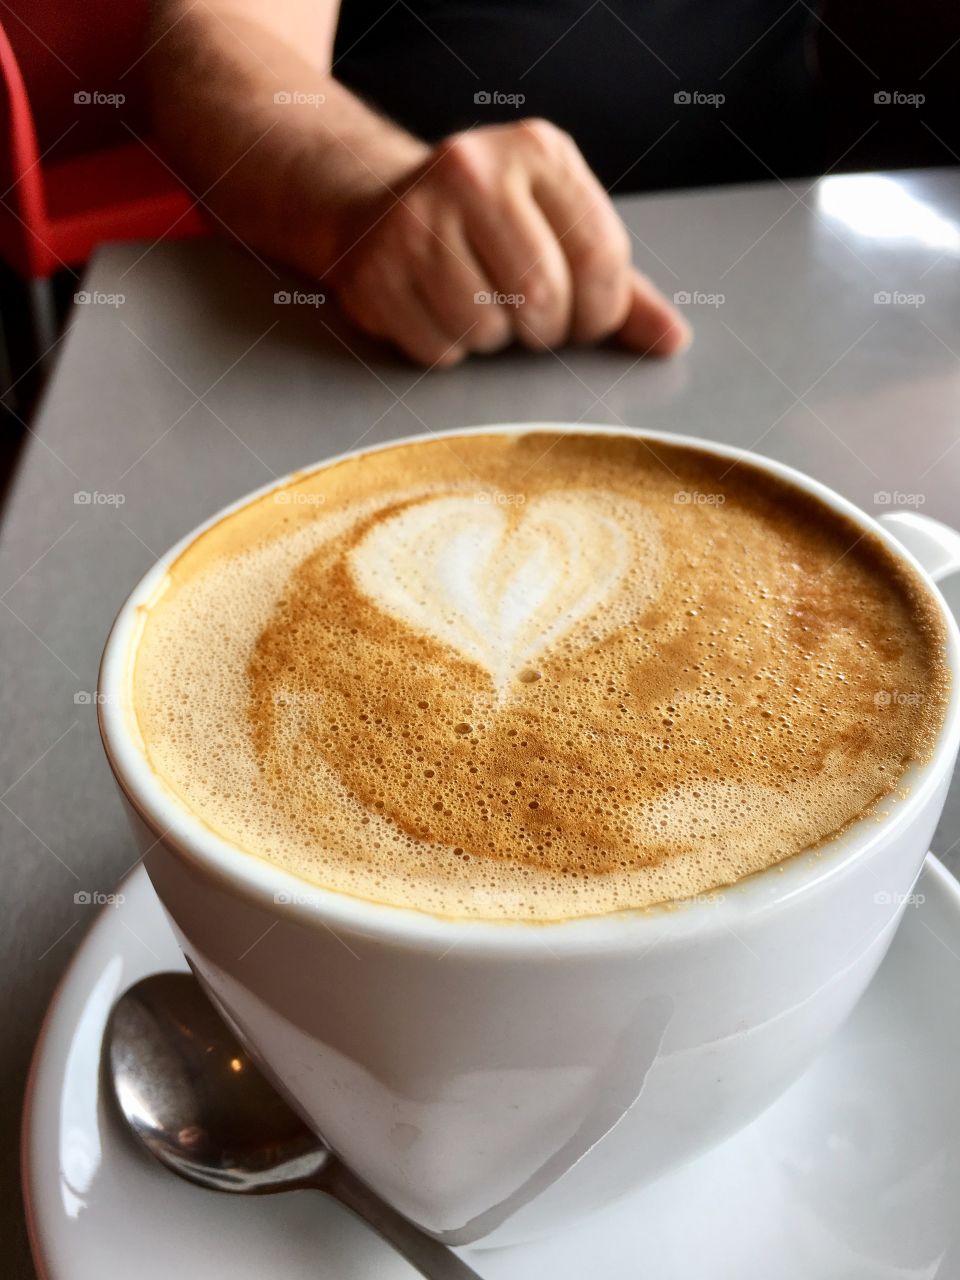 Valentine's Day love heart shape in white cream foam of Cafe latte coffee 